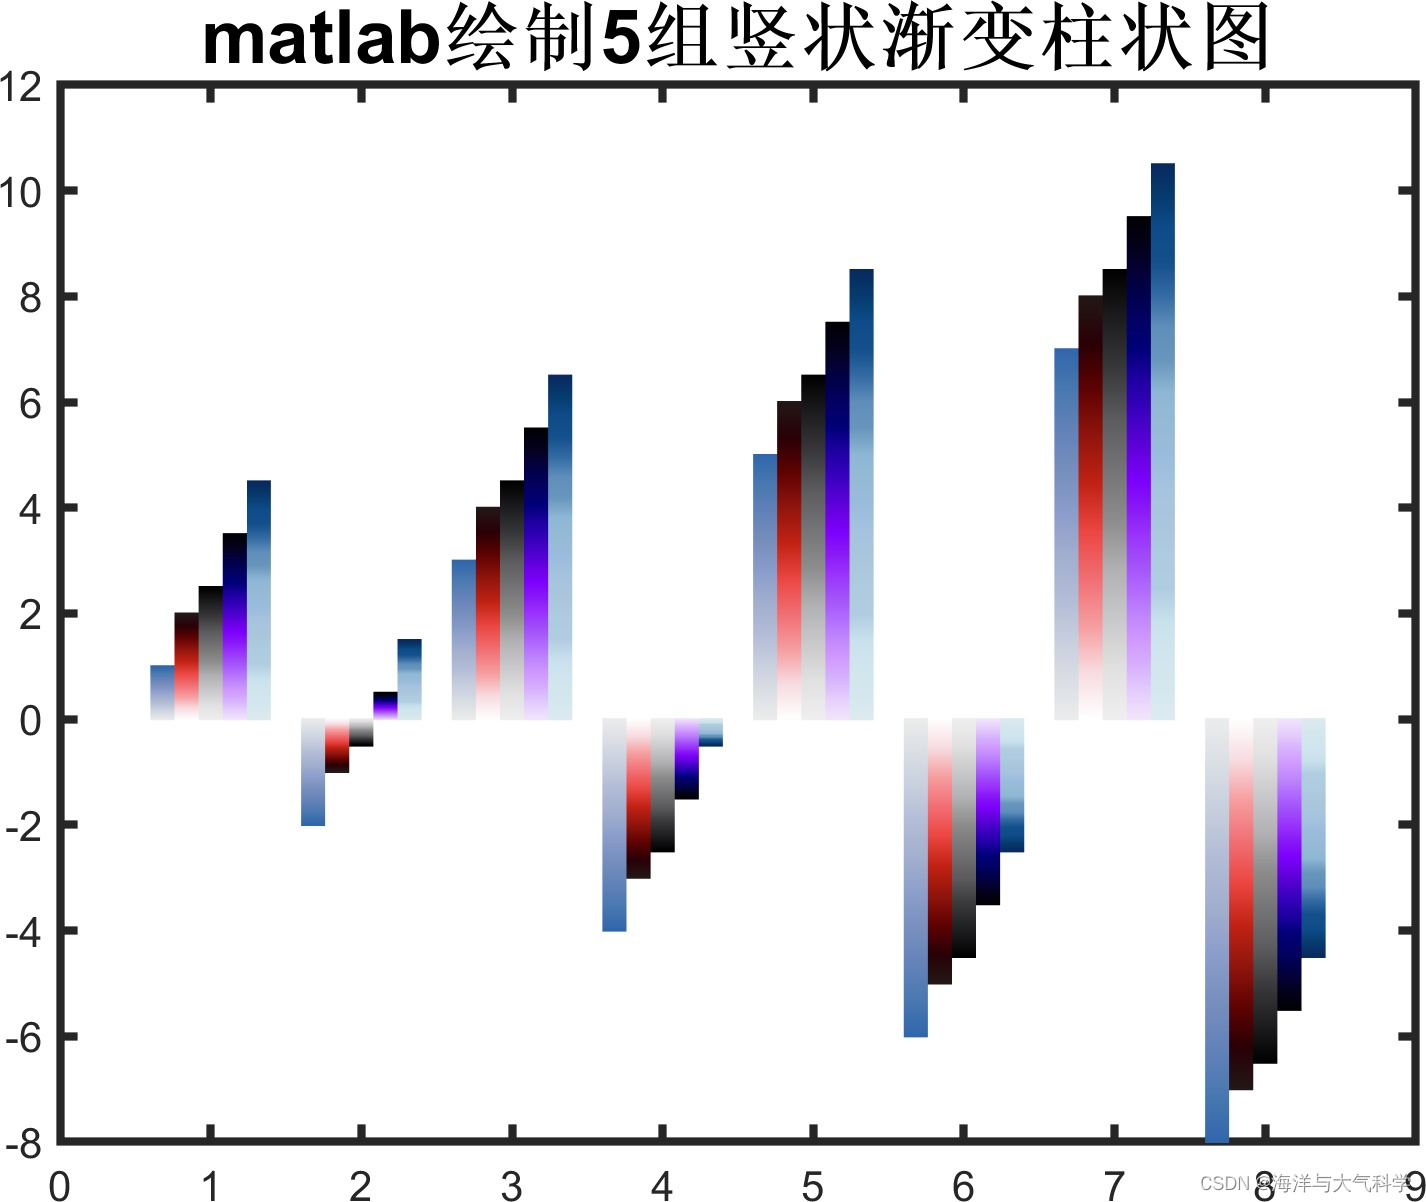 【matlab】matlab多组竖状渐变柱状图